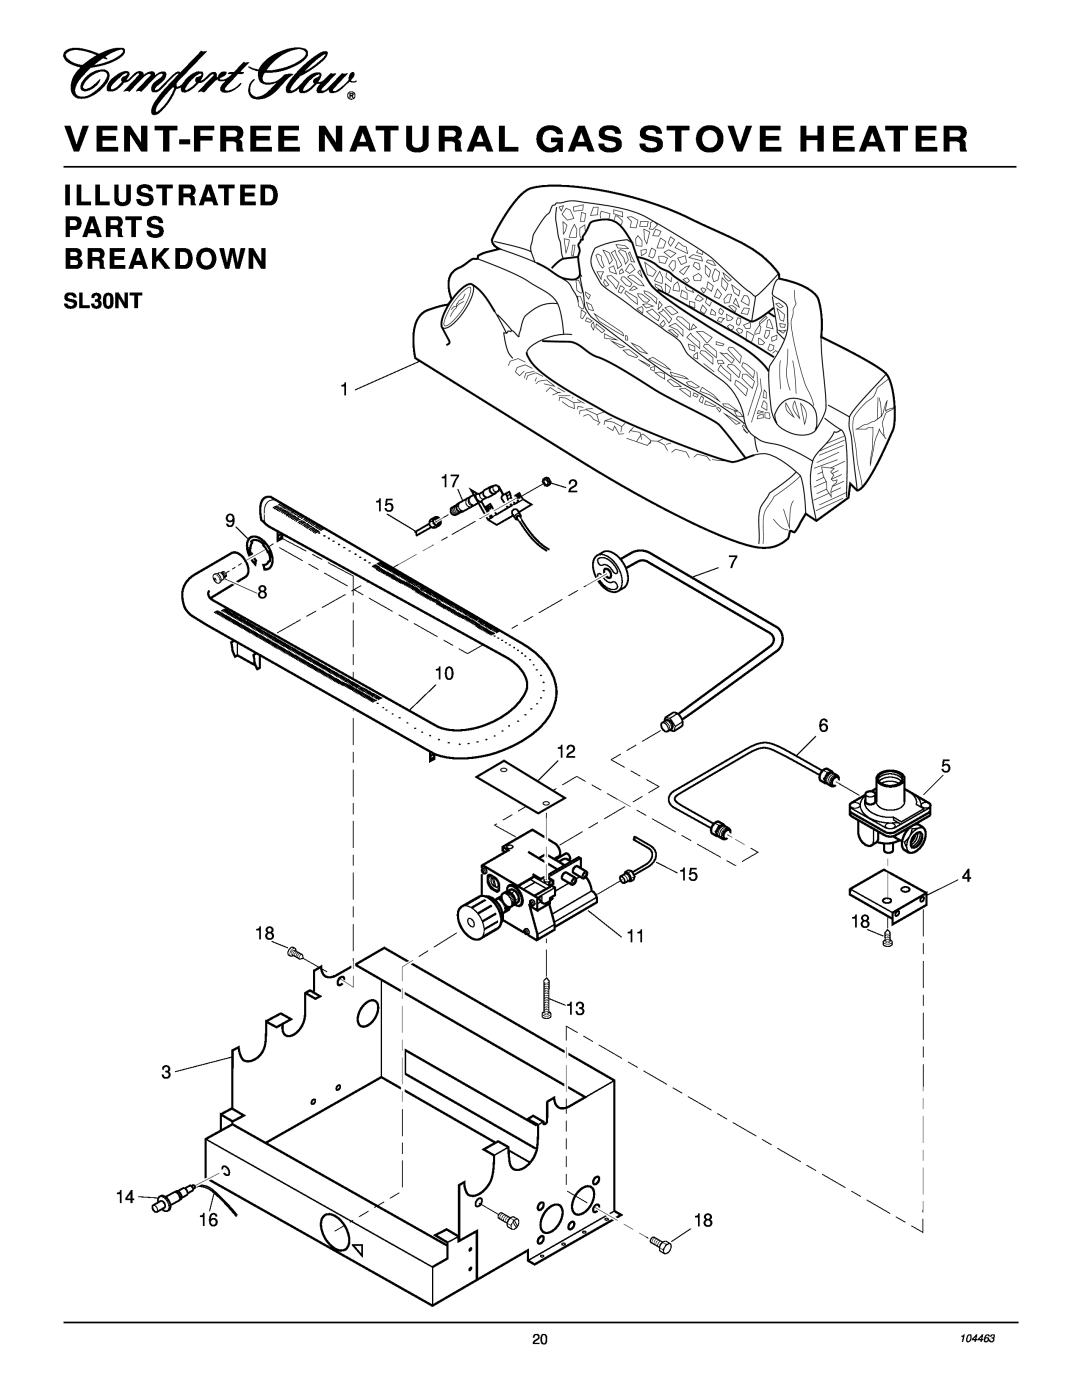 Desa Tech SL30NT installation manual Illustrated Parts Breakdown, Vent-Freenatural Gas Stove Heater, 1 17 15 7, 104463 